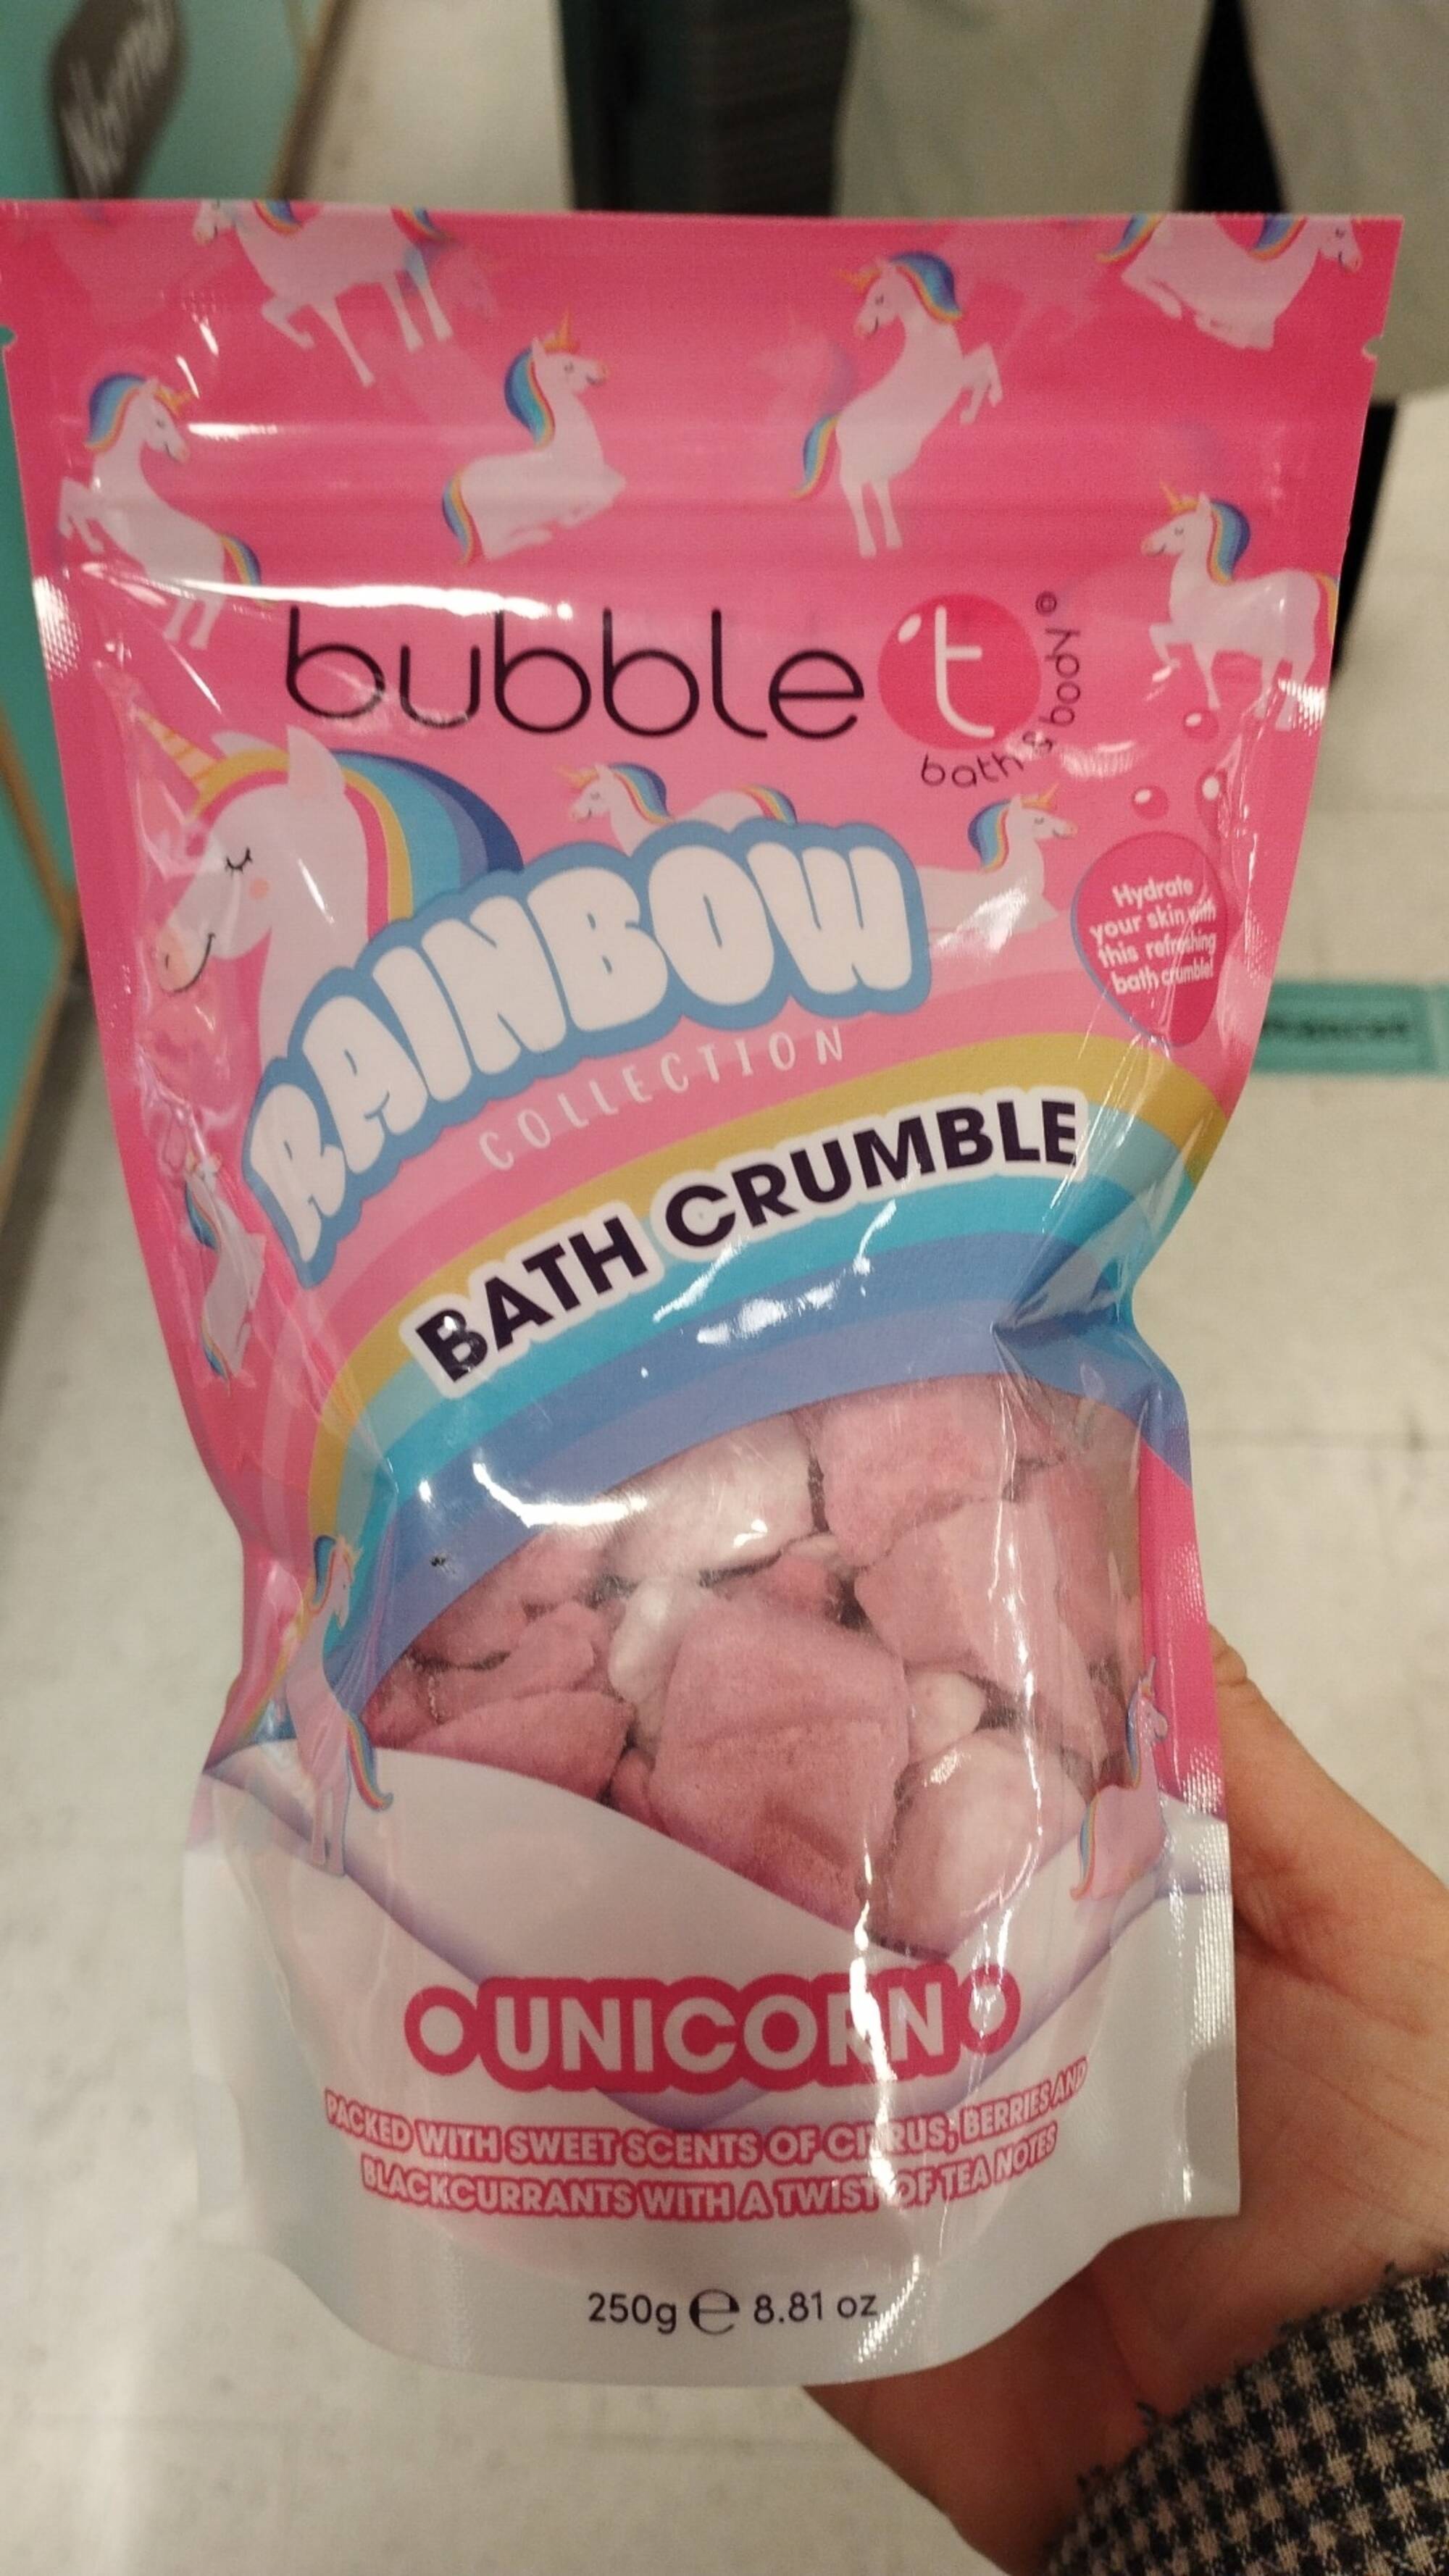 BUBBLE T - Rainbow collection - Bath crumble